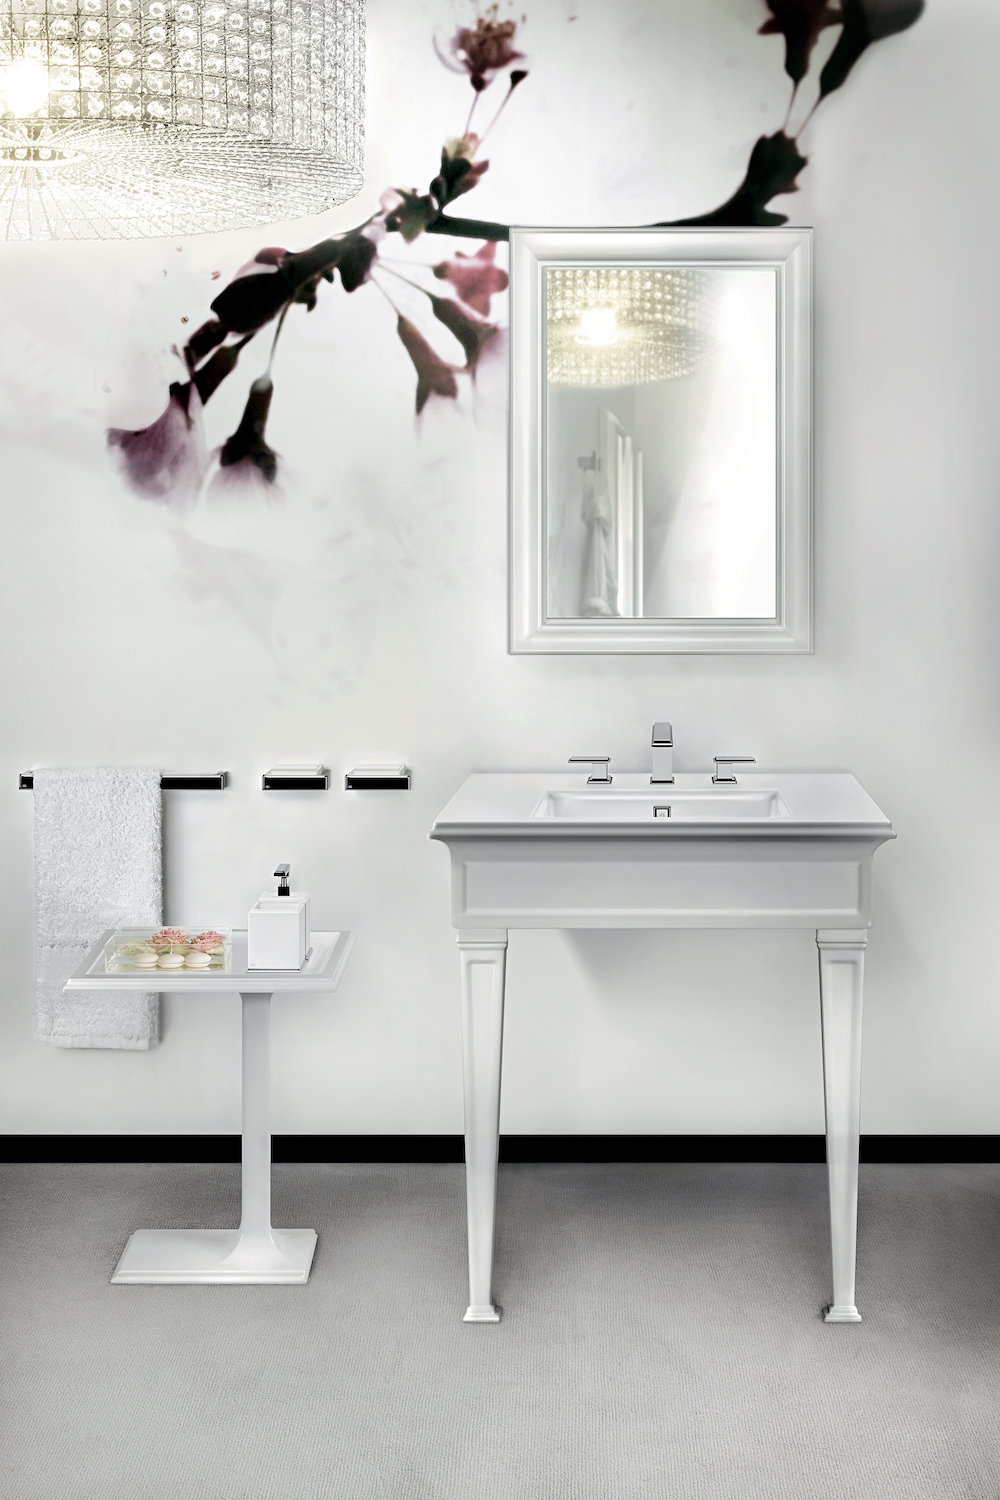 Modern, classic bathroomm basin